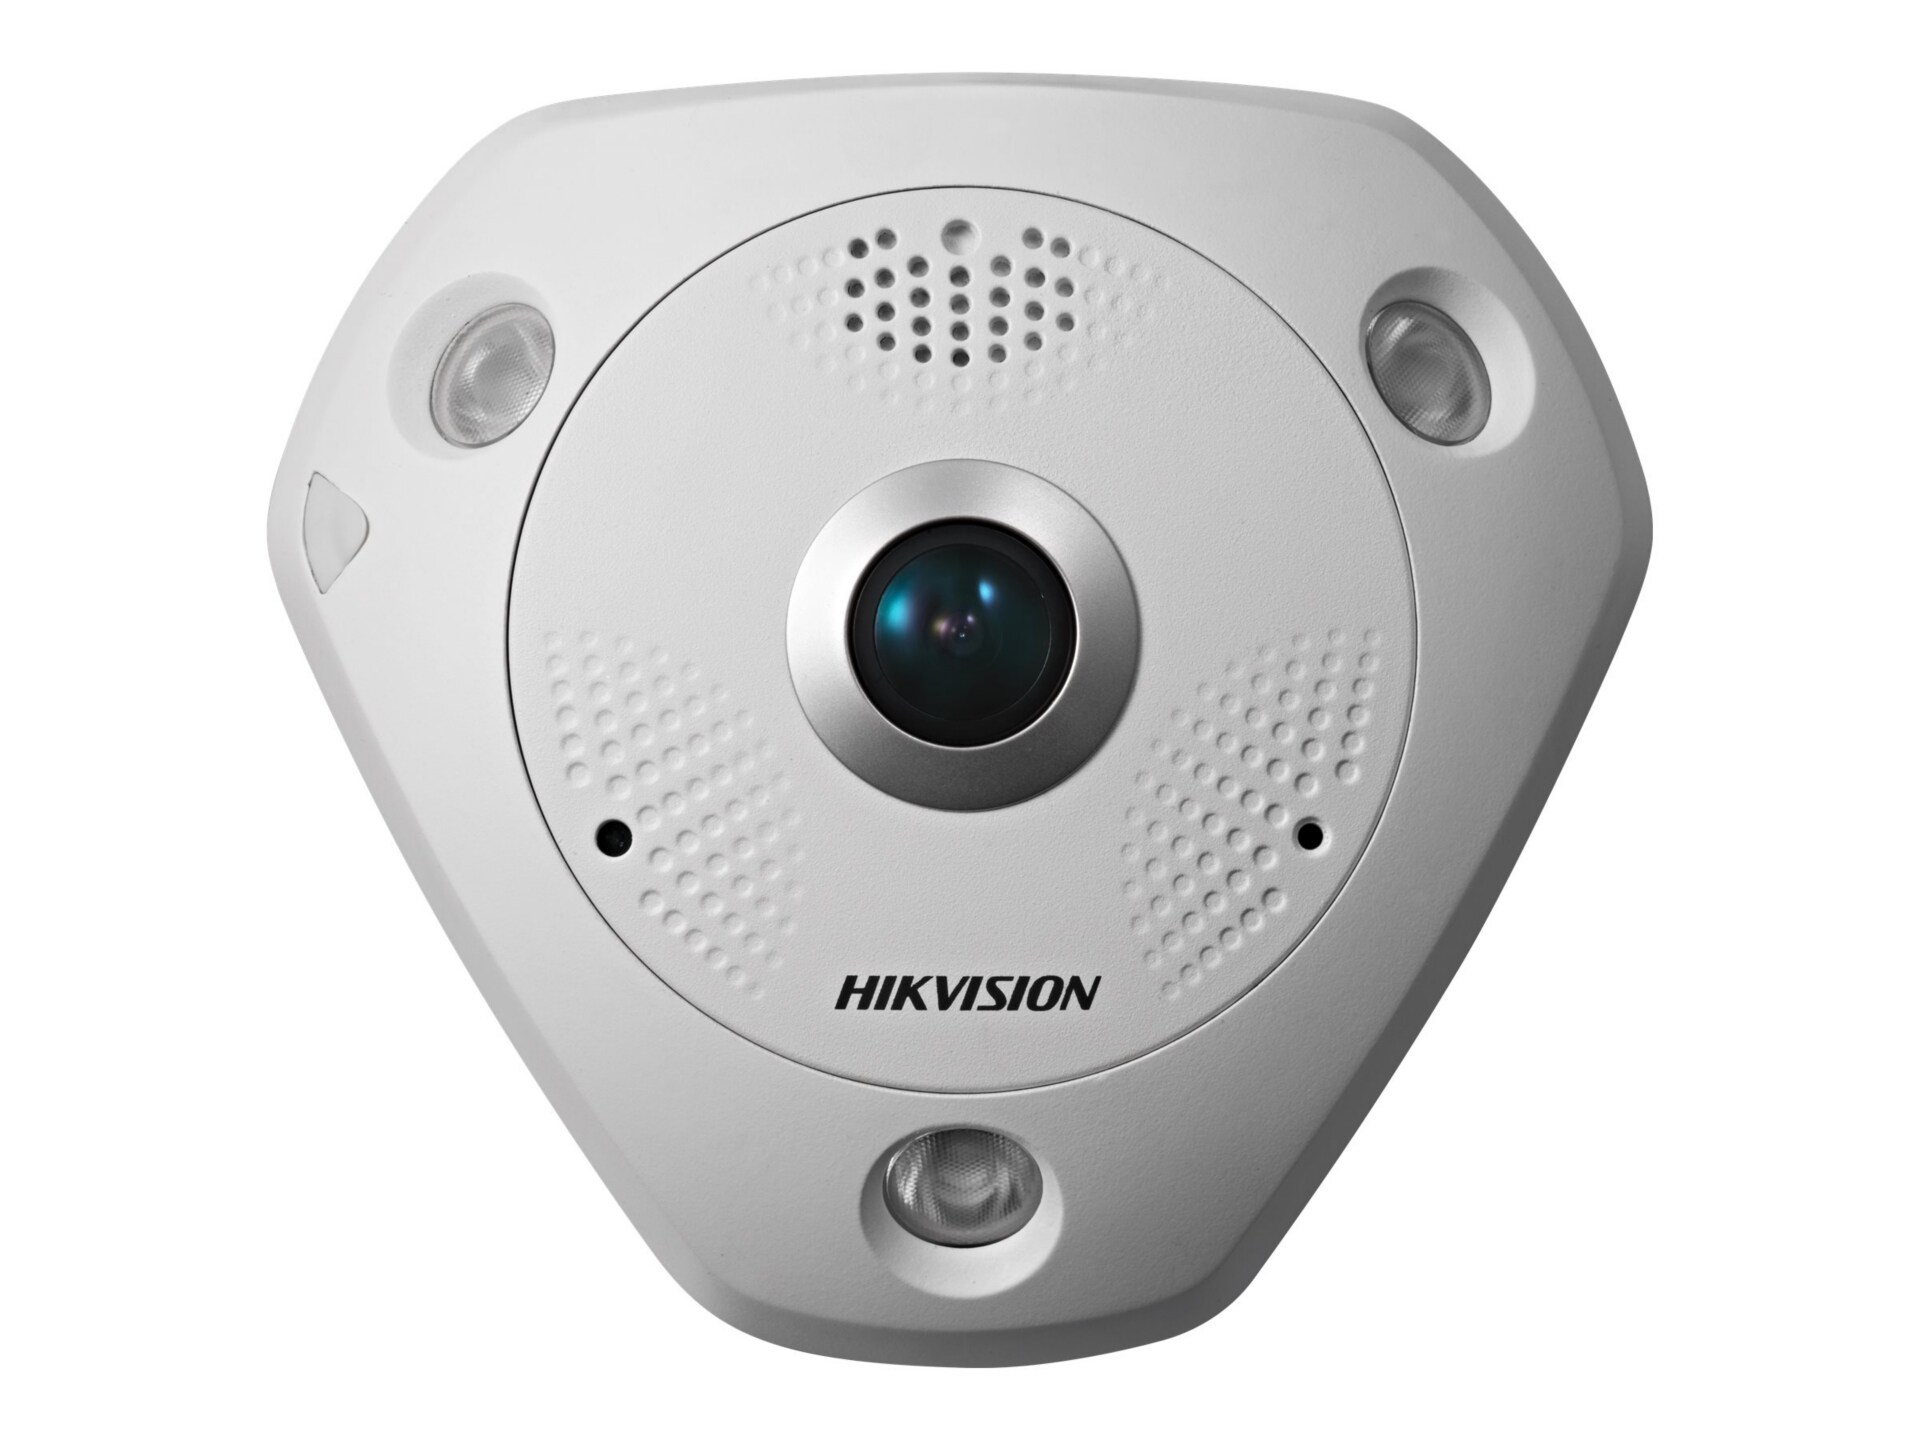 Hikvision DS-2CD6362F-I - network surveillance camera